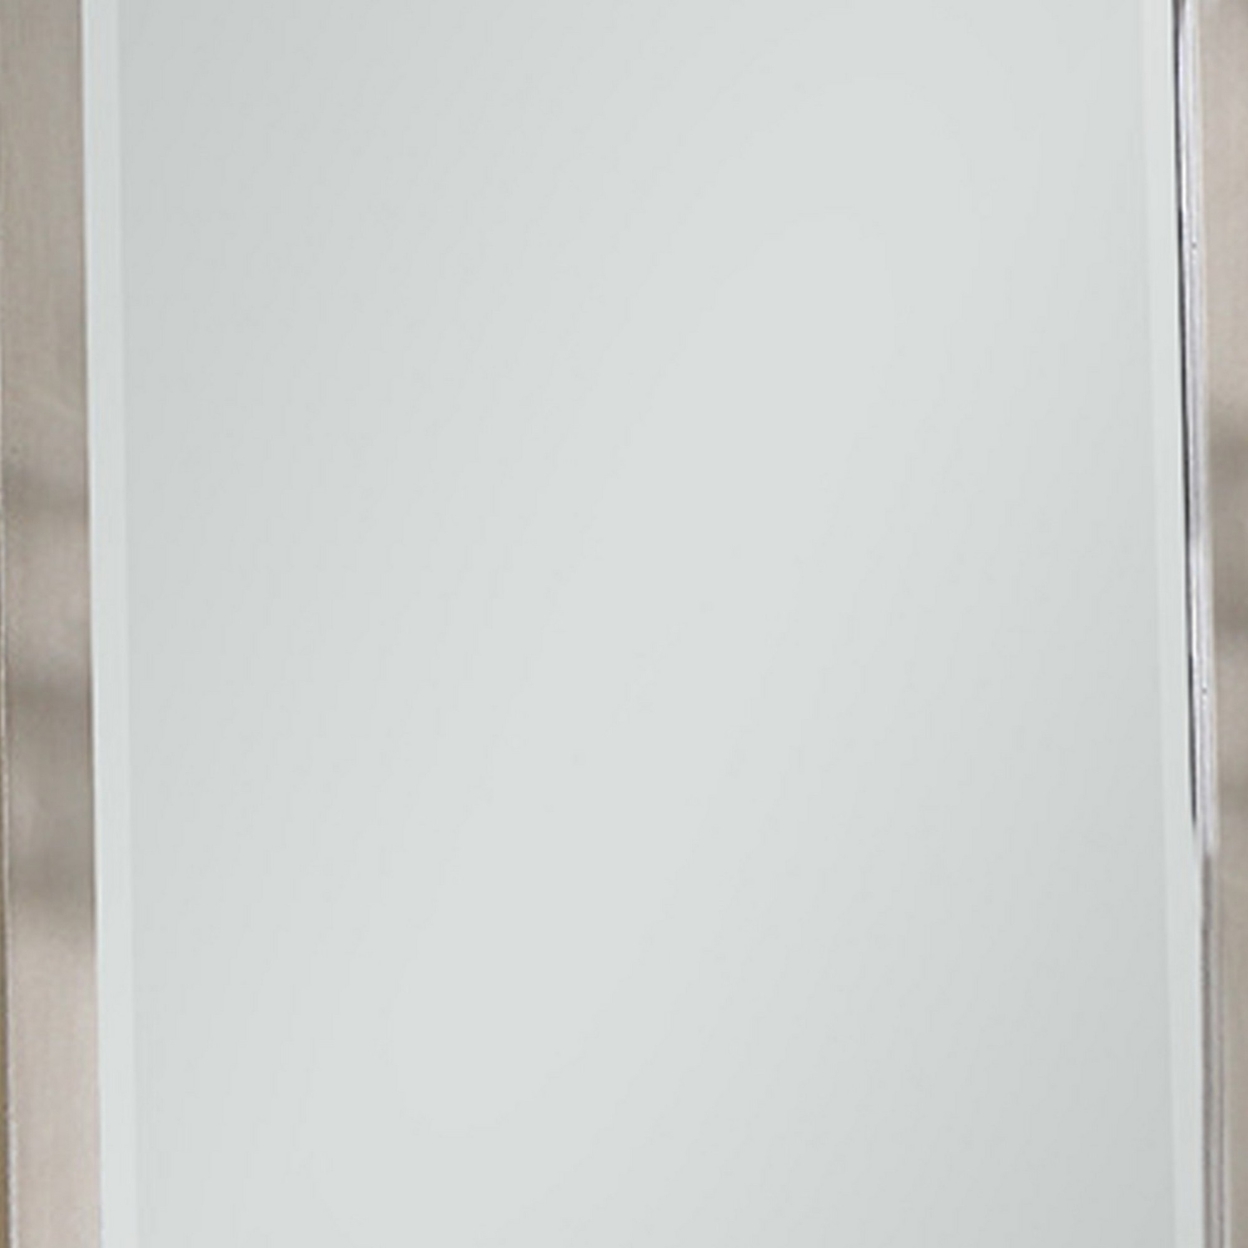 Bran 36 X 36 Modern Square Dresser Mirror, Pine Wood, Light Brown- Saltoro Sherpi